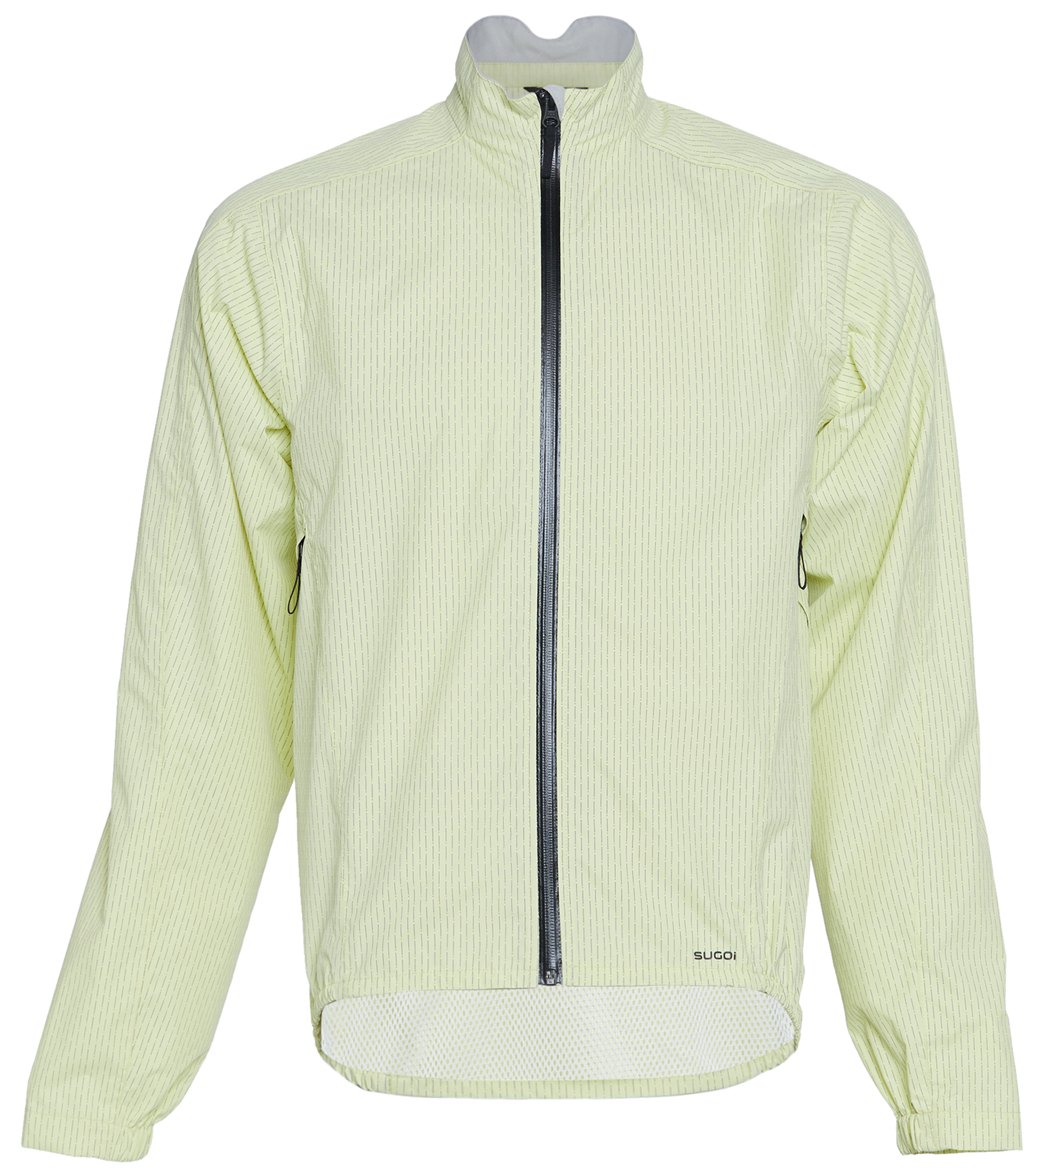 Sugoi Men's Zap Bike Jacket - Lit Large Polyester - Swimoutlet.com